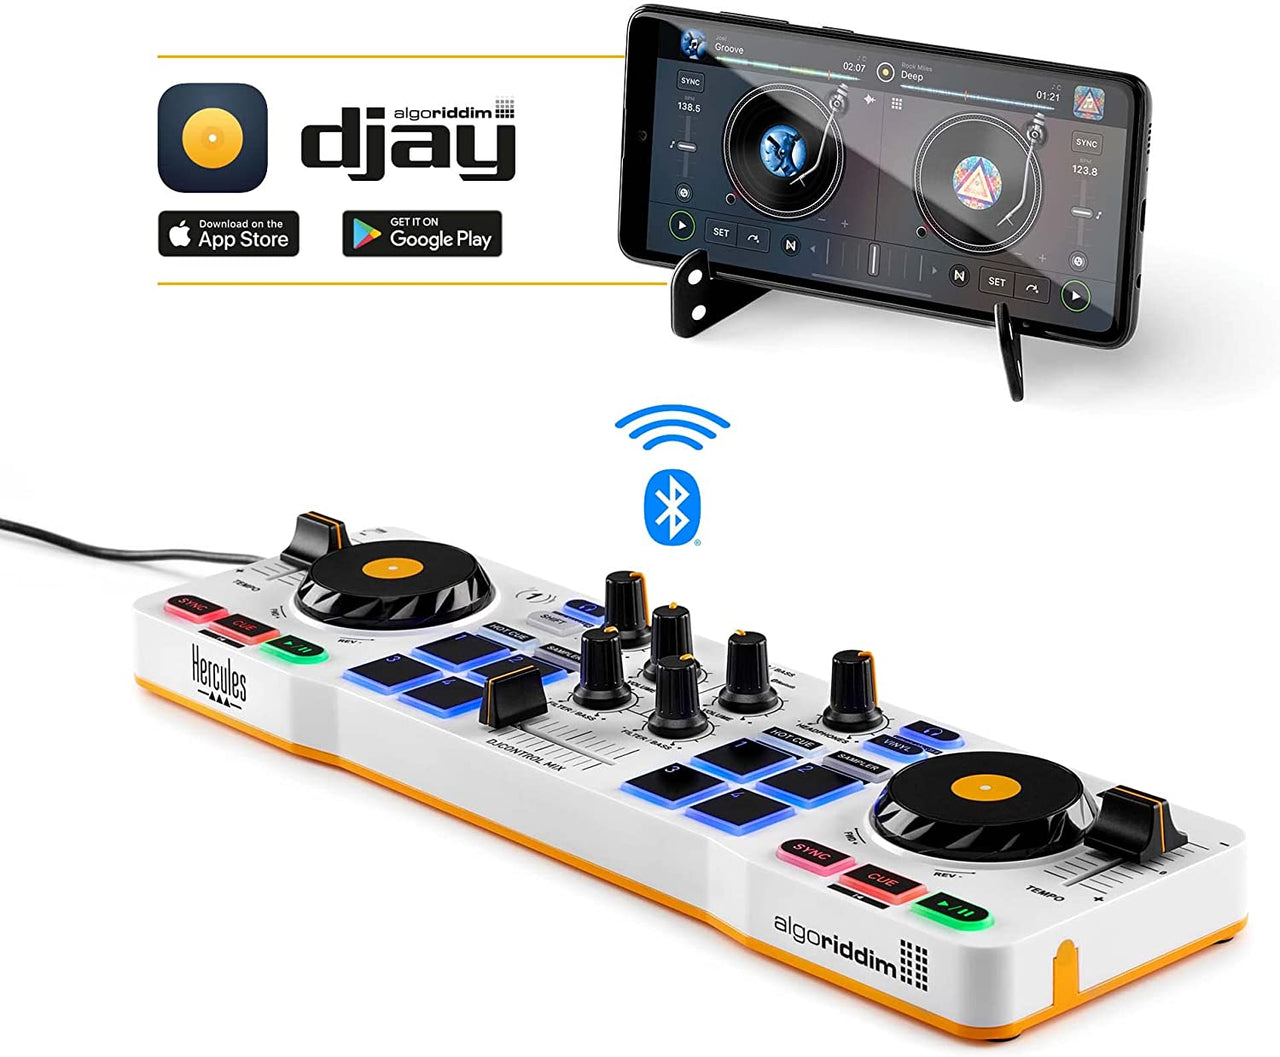 Hercules DJControl Mix Bluetooth Wireless DJ Controller for Smartphone